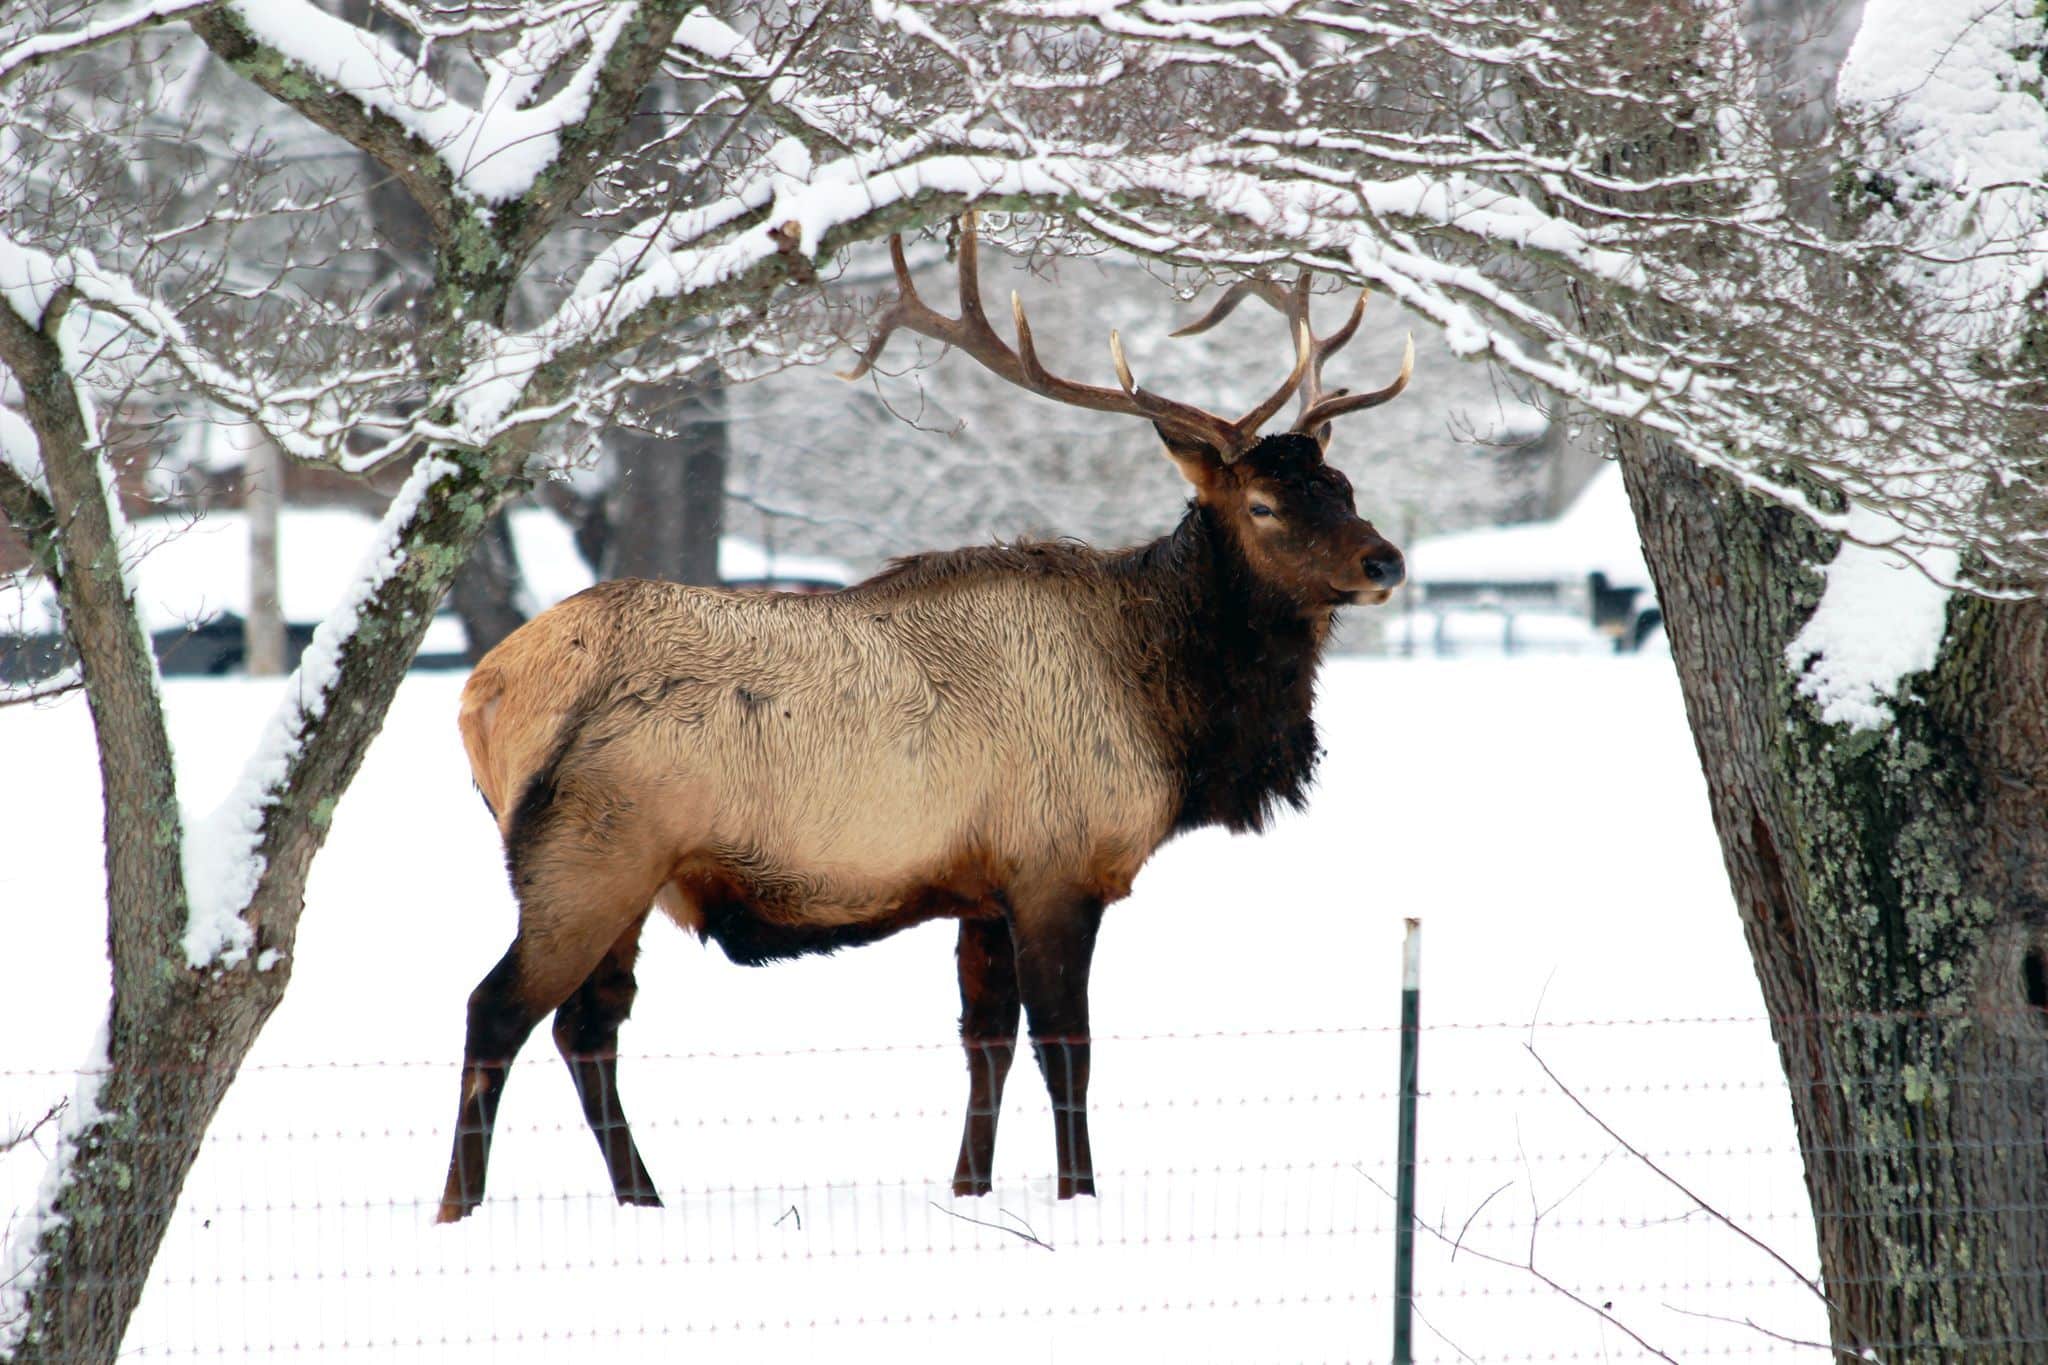 Elk standing in snowy scene